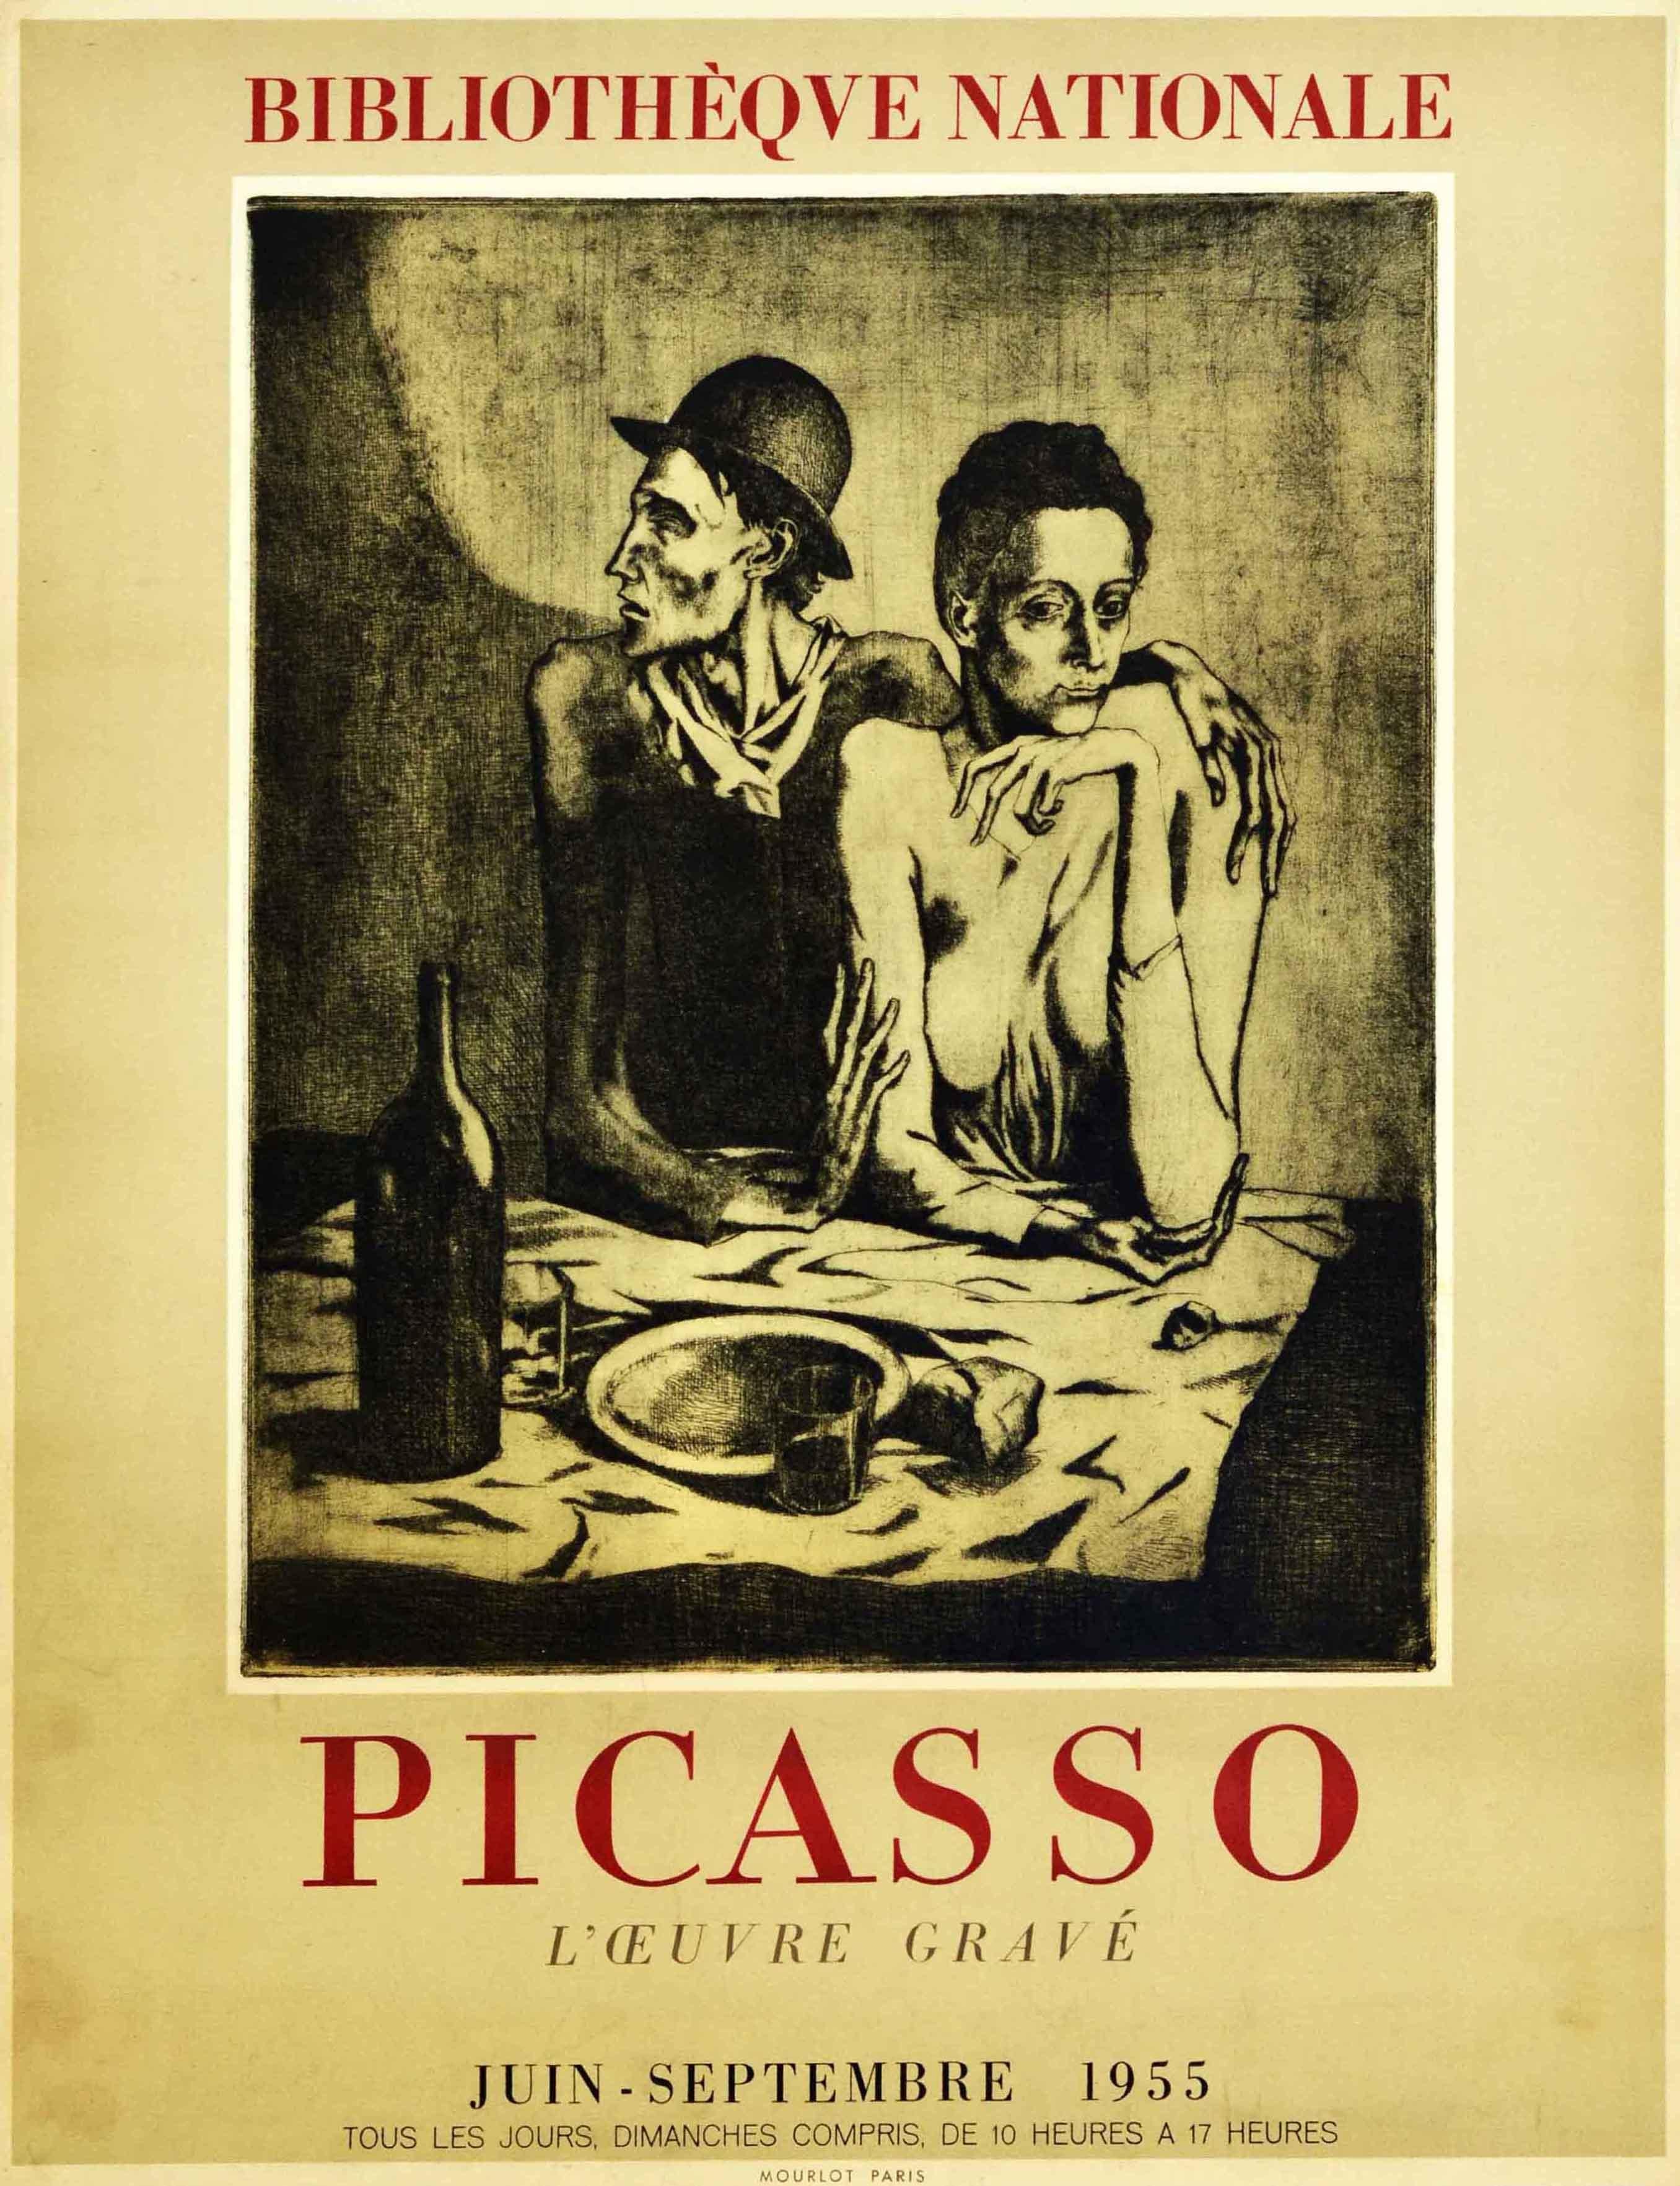 Pablo Picasso Print - Original Vintage Art Poster Picasso Engraving Exhibition Le Repas Frugal Meal